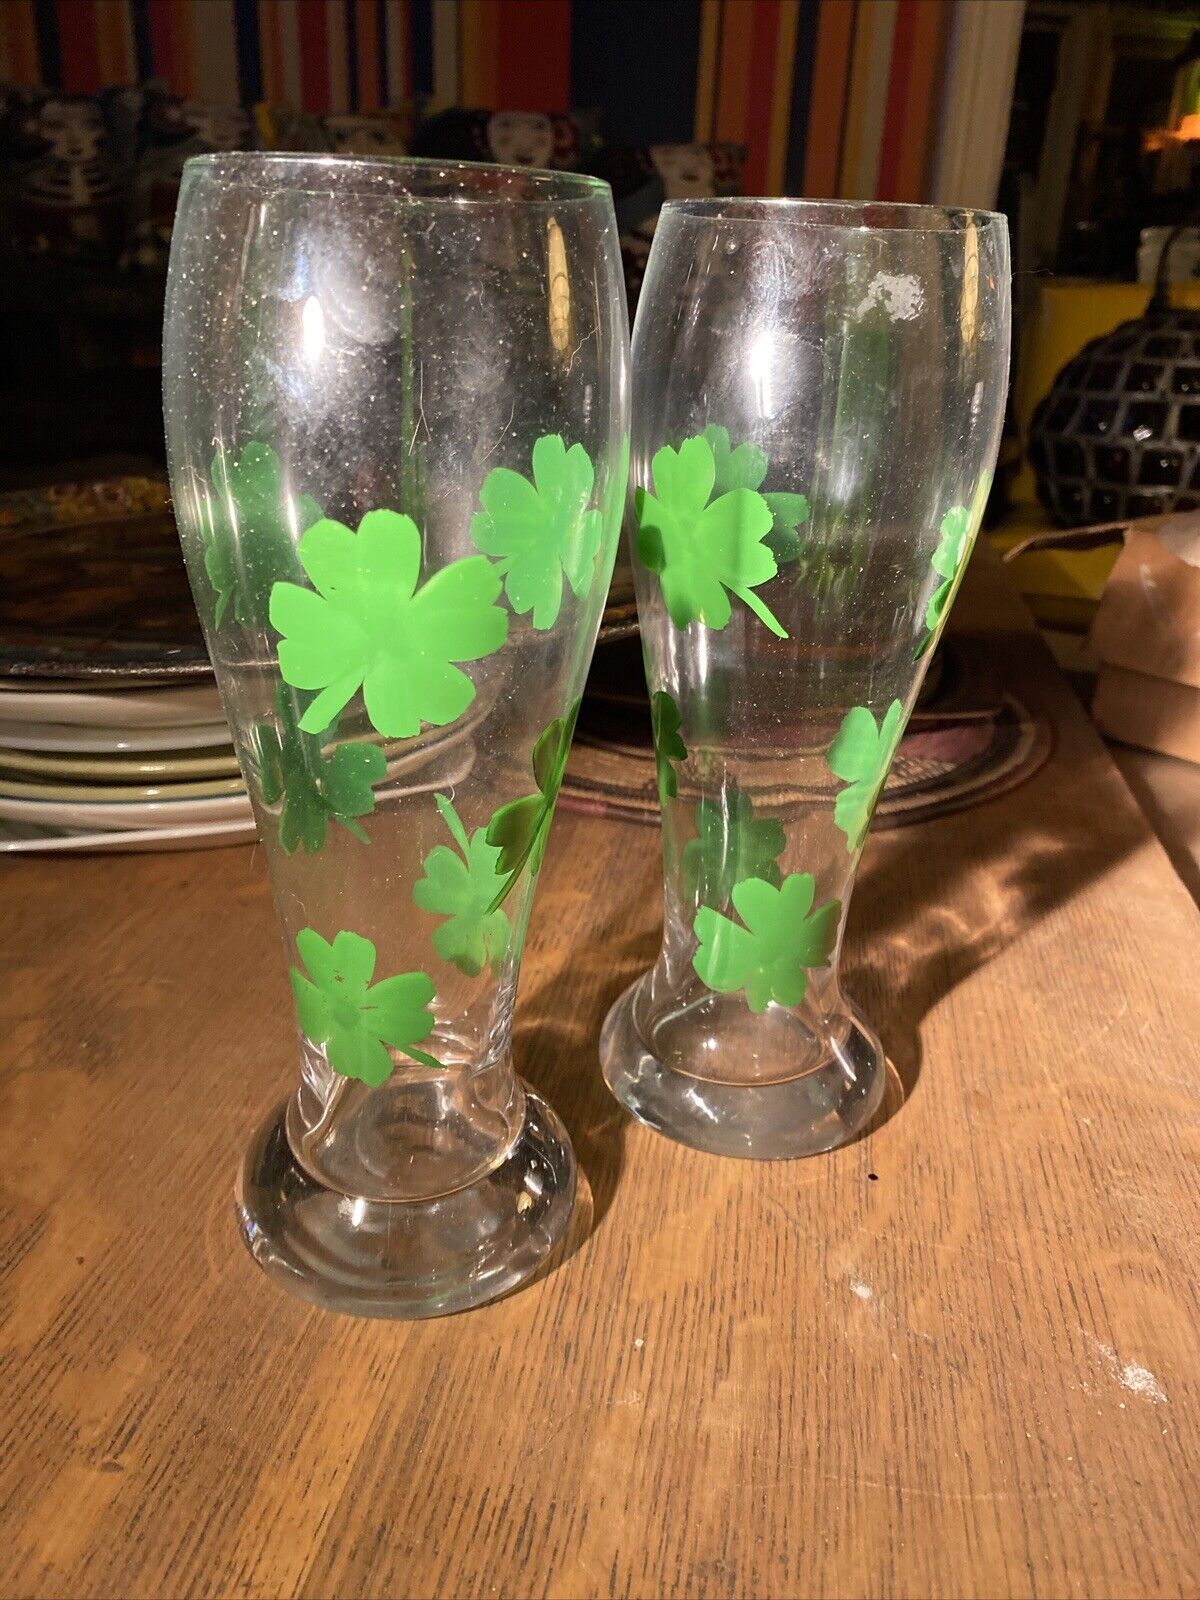 Pair Tall 9” Heavy Beer Glasses Hand Painted Shamrock Irish At Patrick’s Day